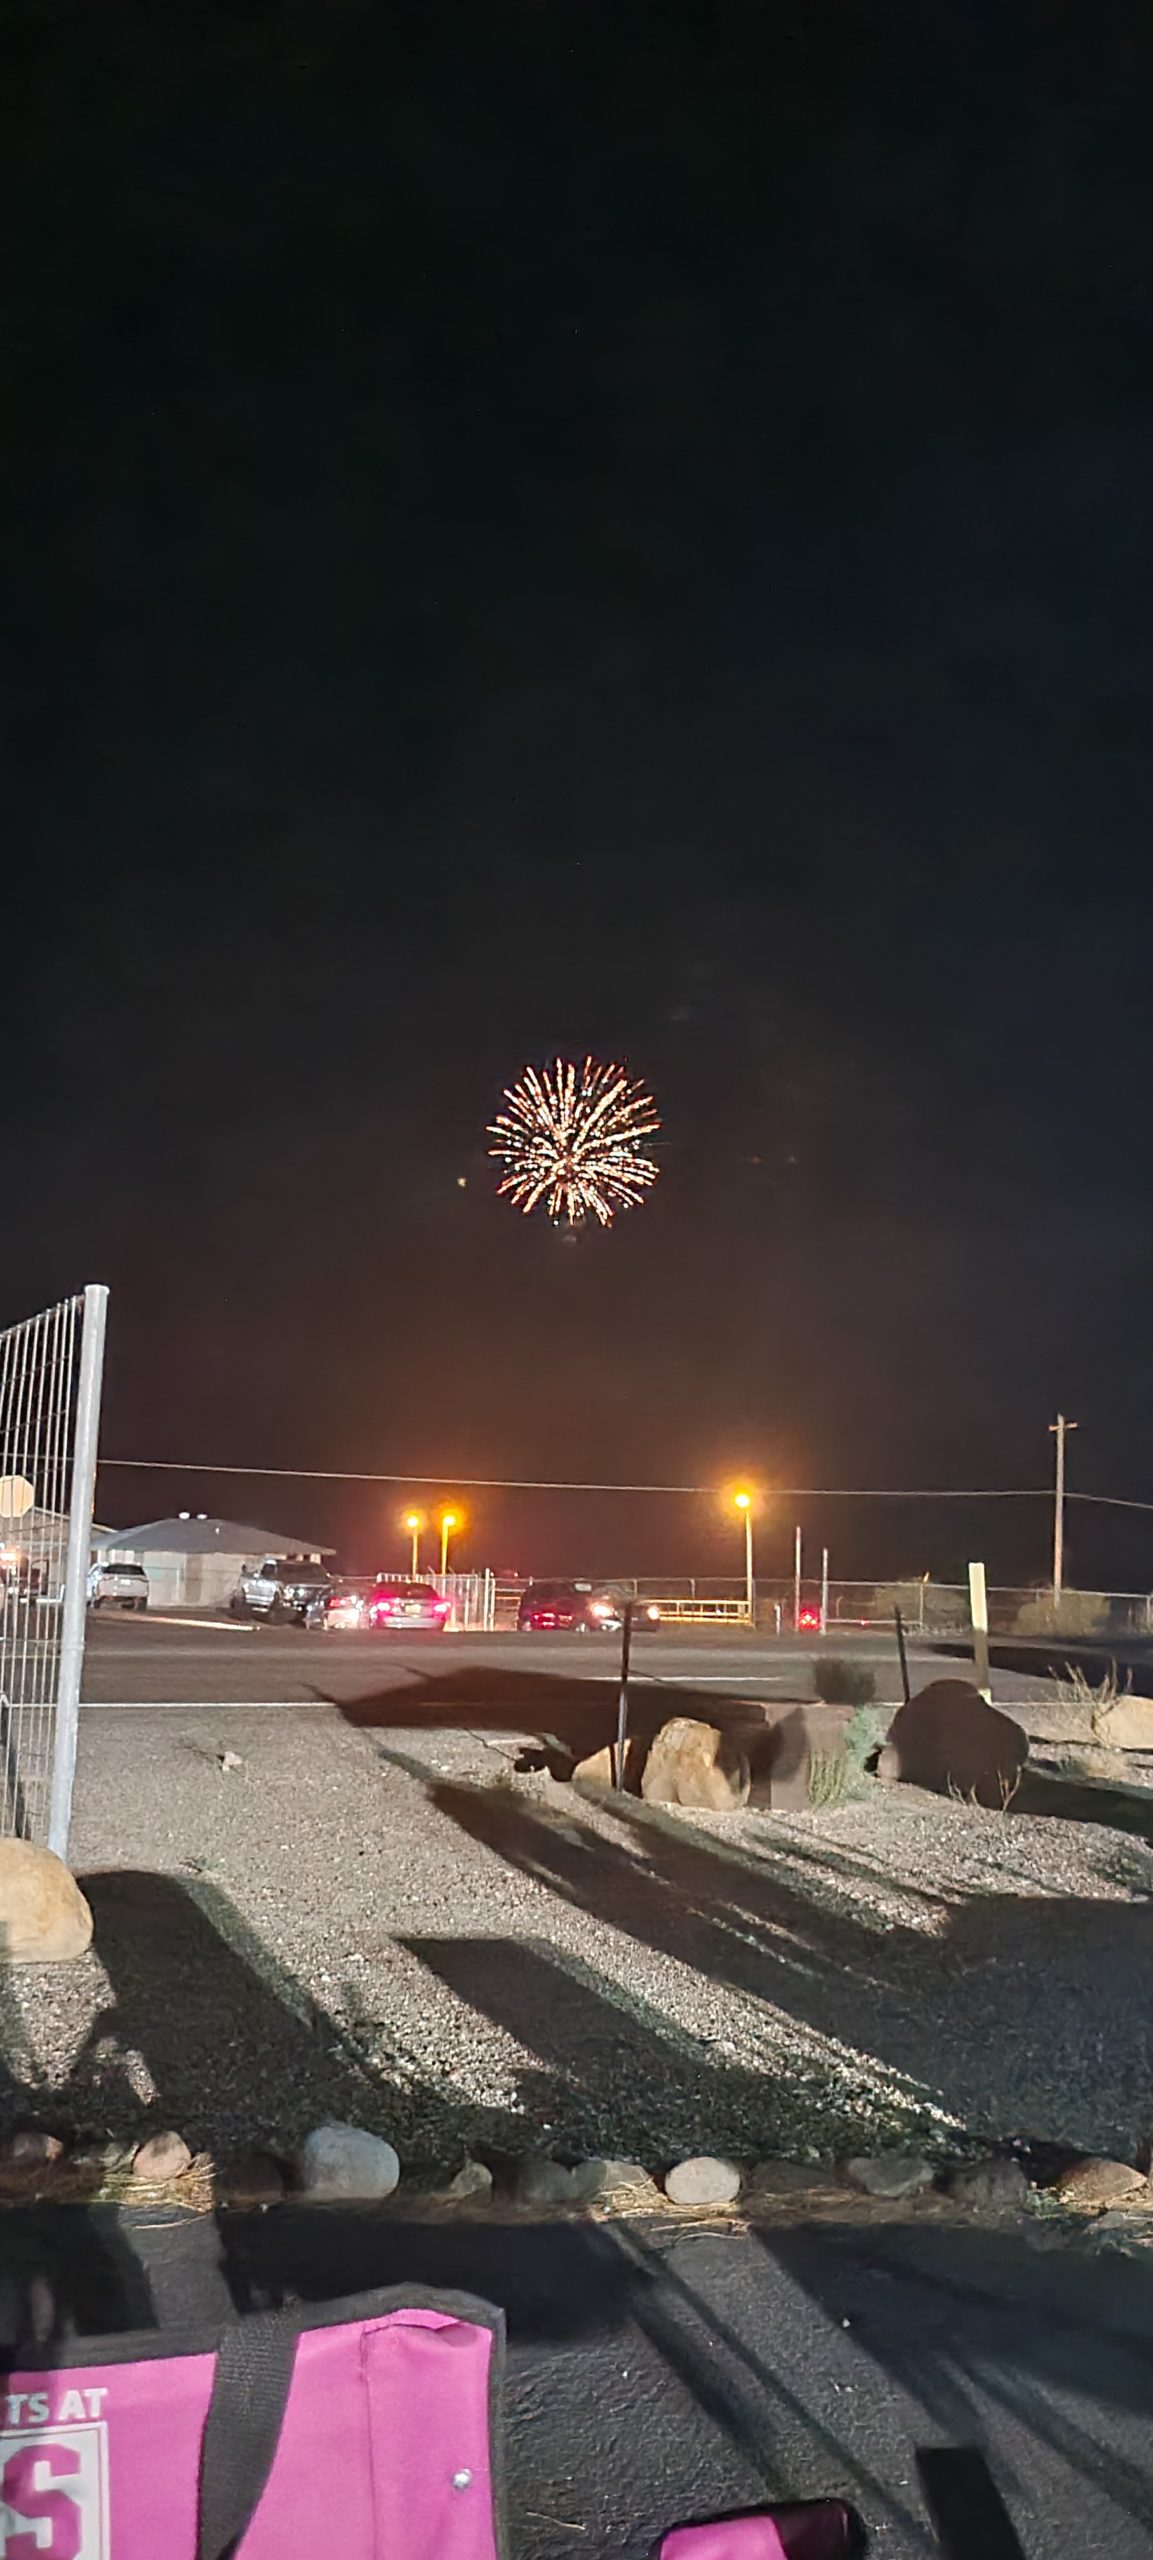 Fireworks on 4th of July in Stafford Arizona